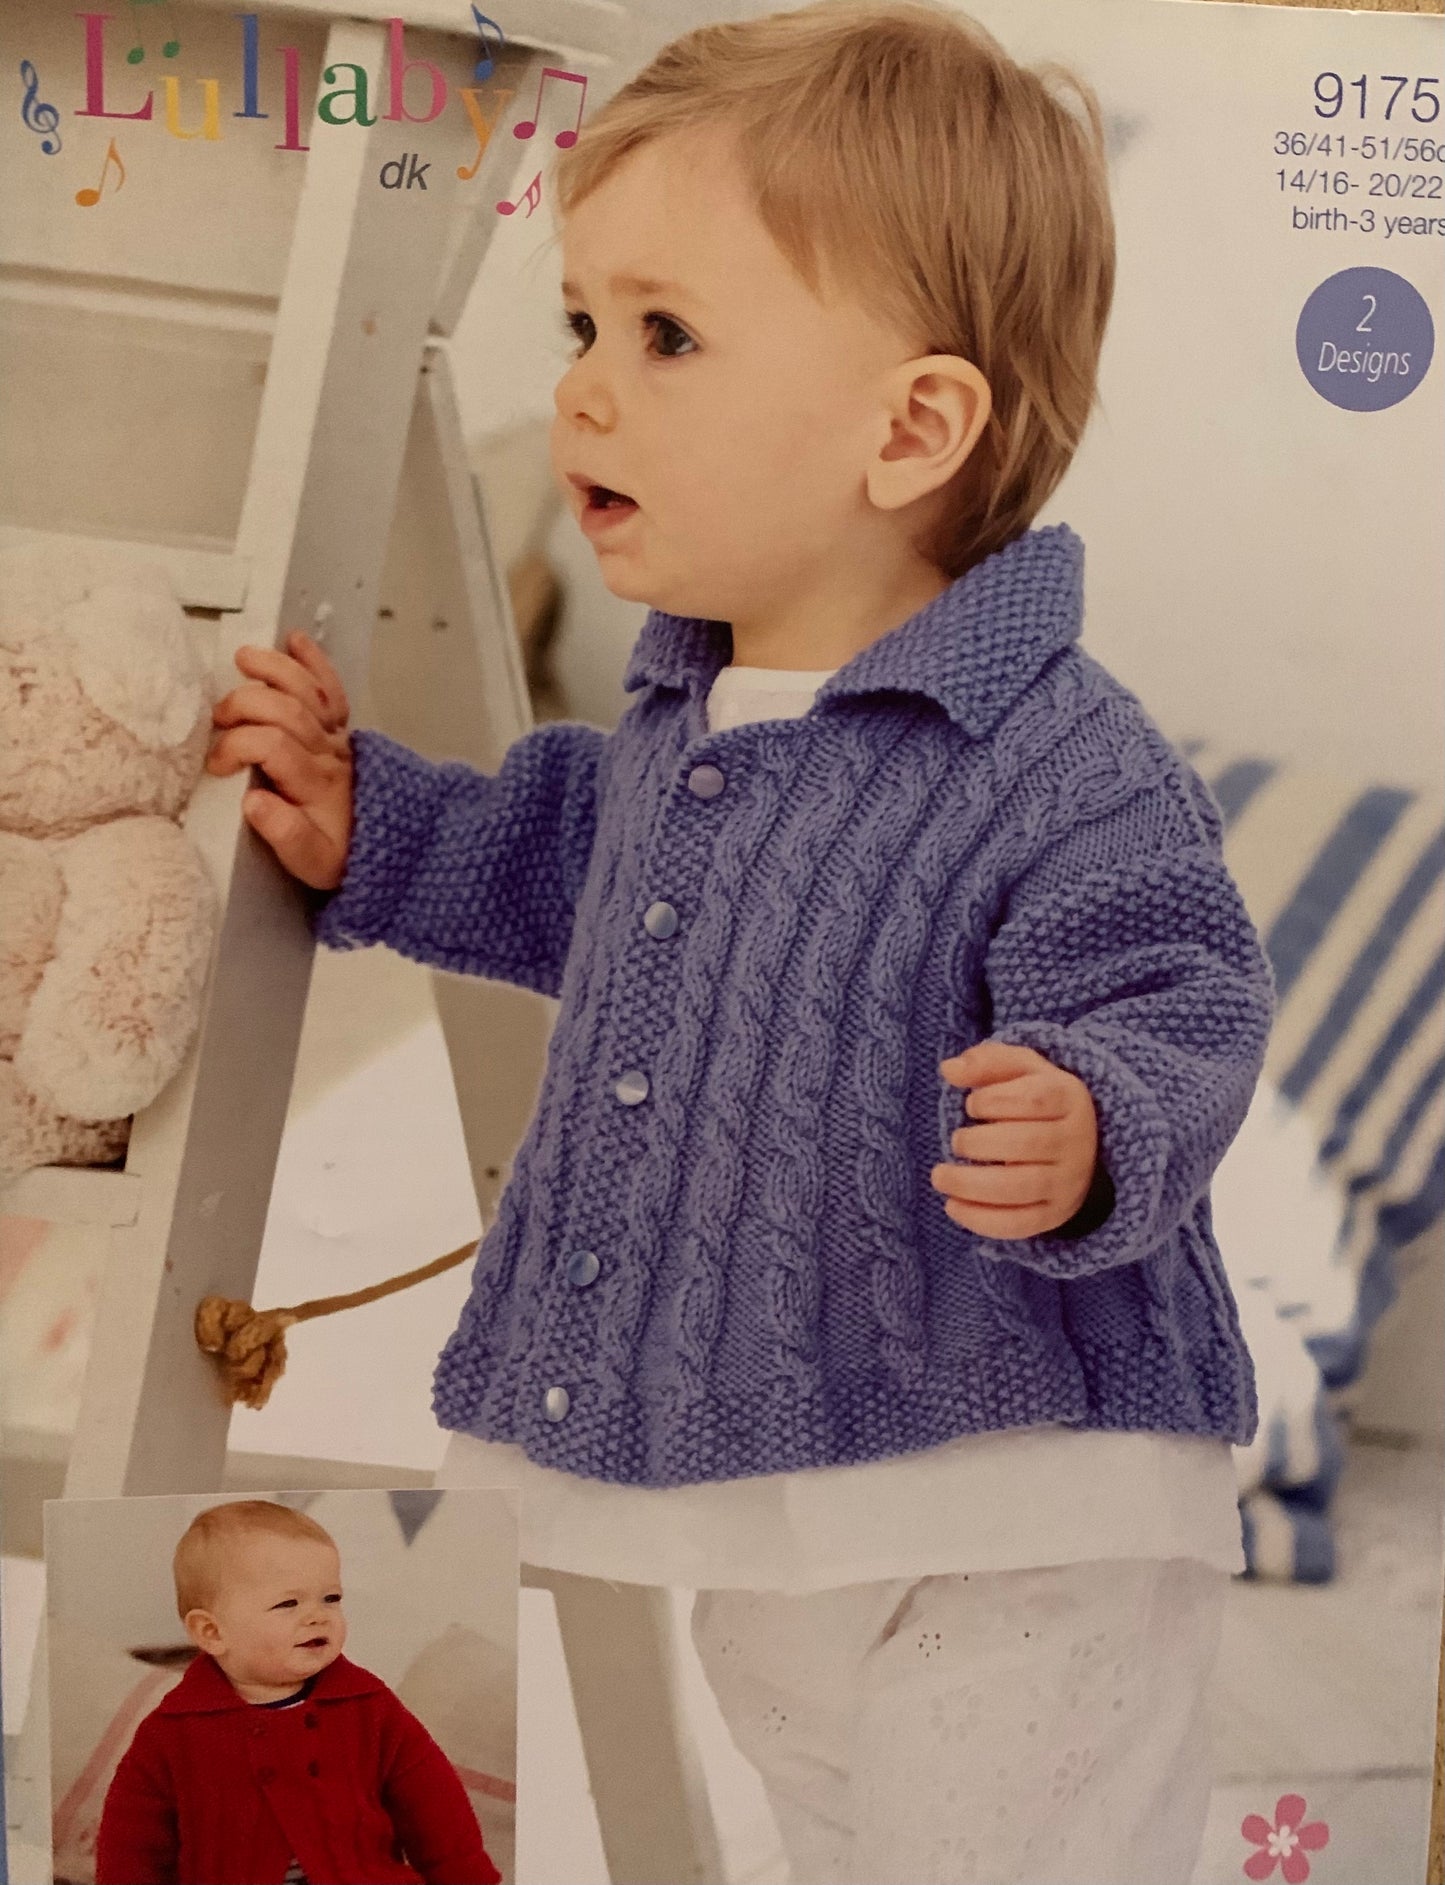 9175 Stylecraft Lullaby dk baby children cardigan jacket knitting pattern